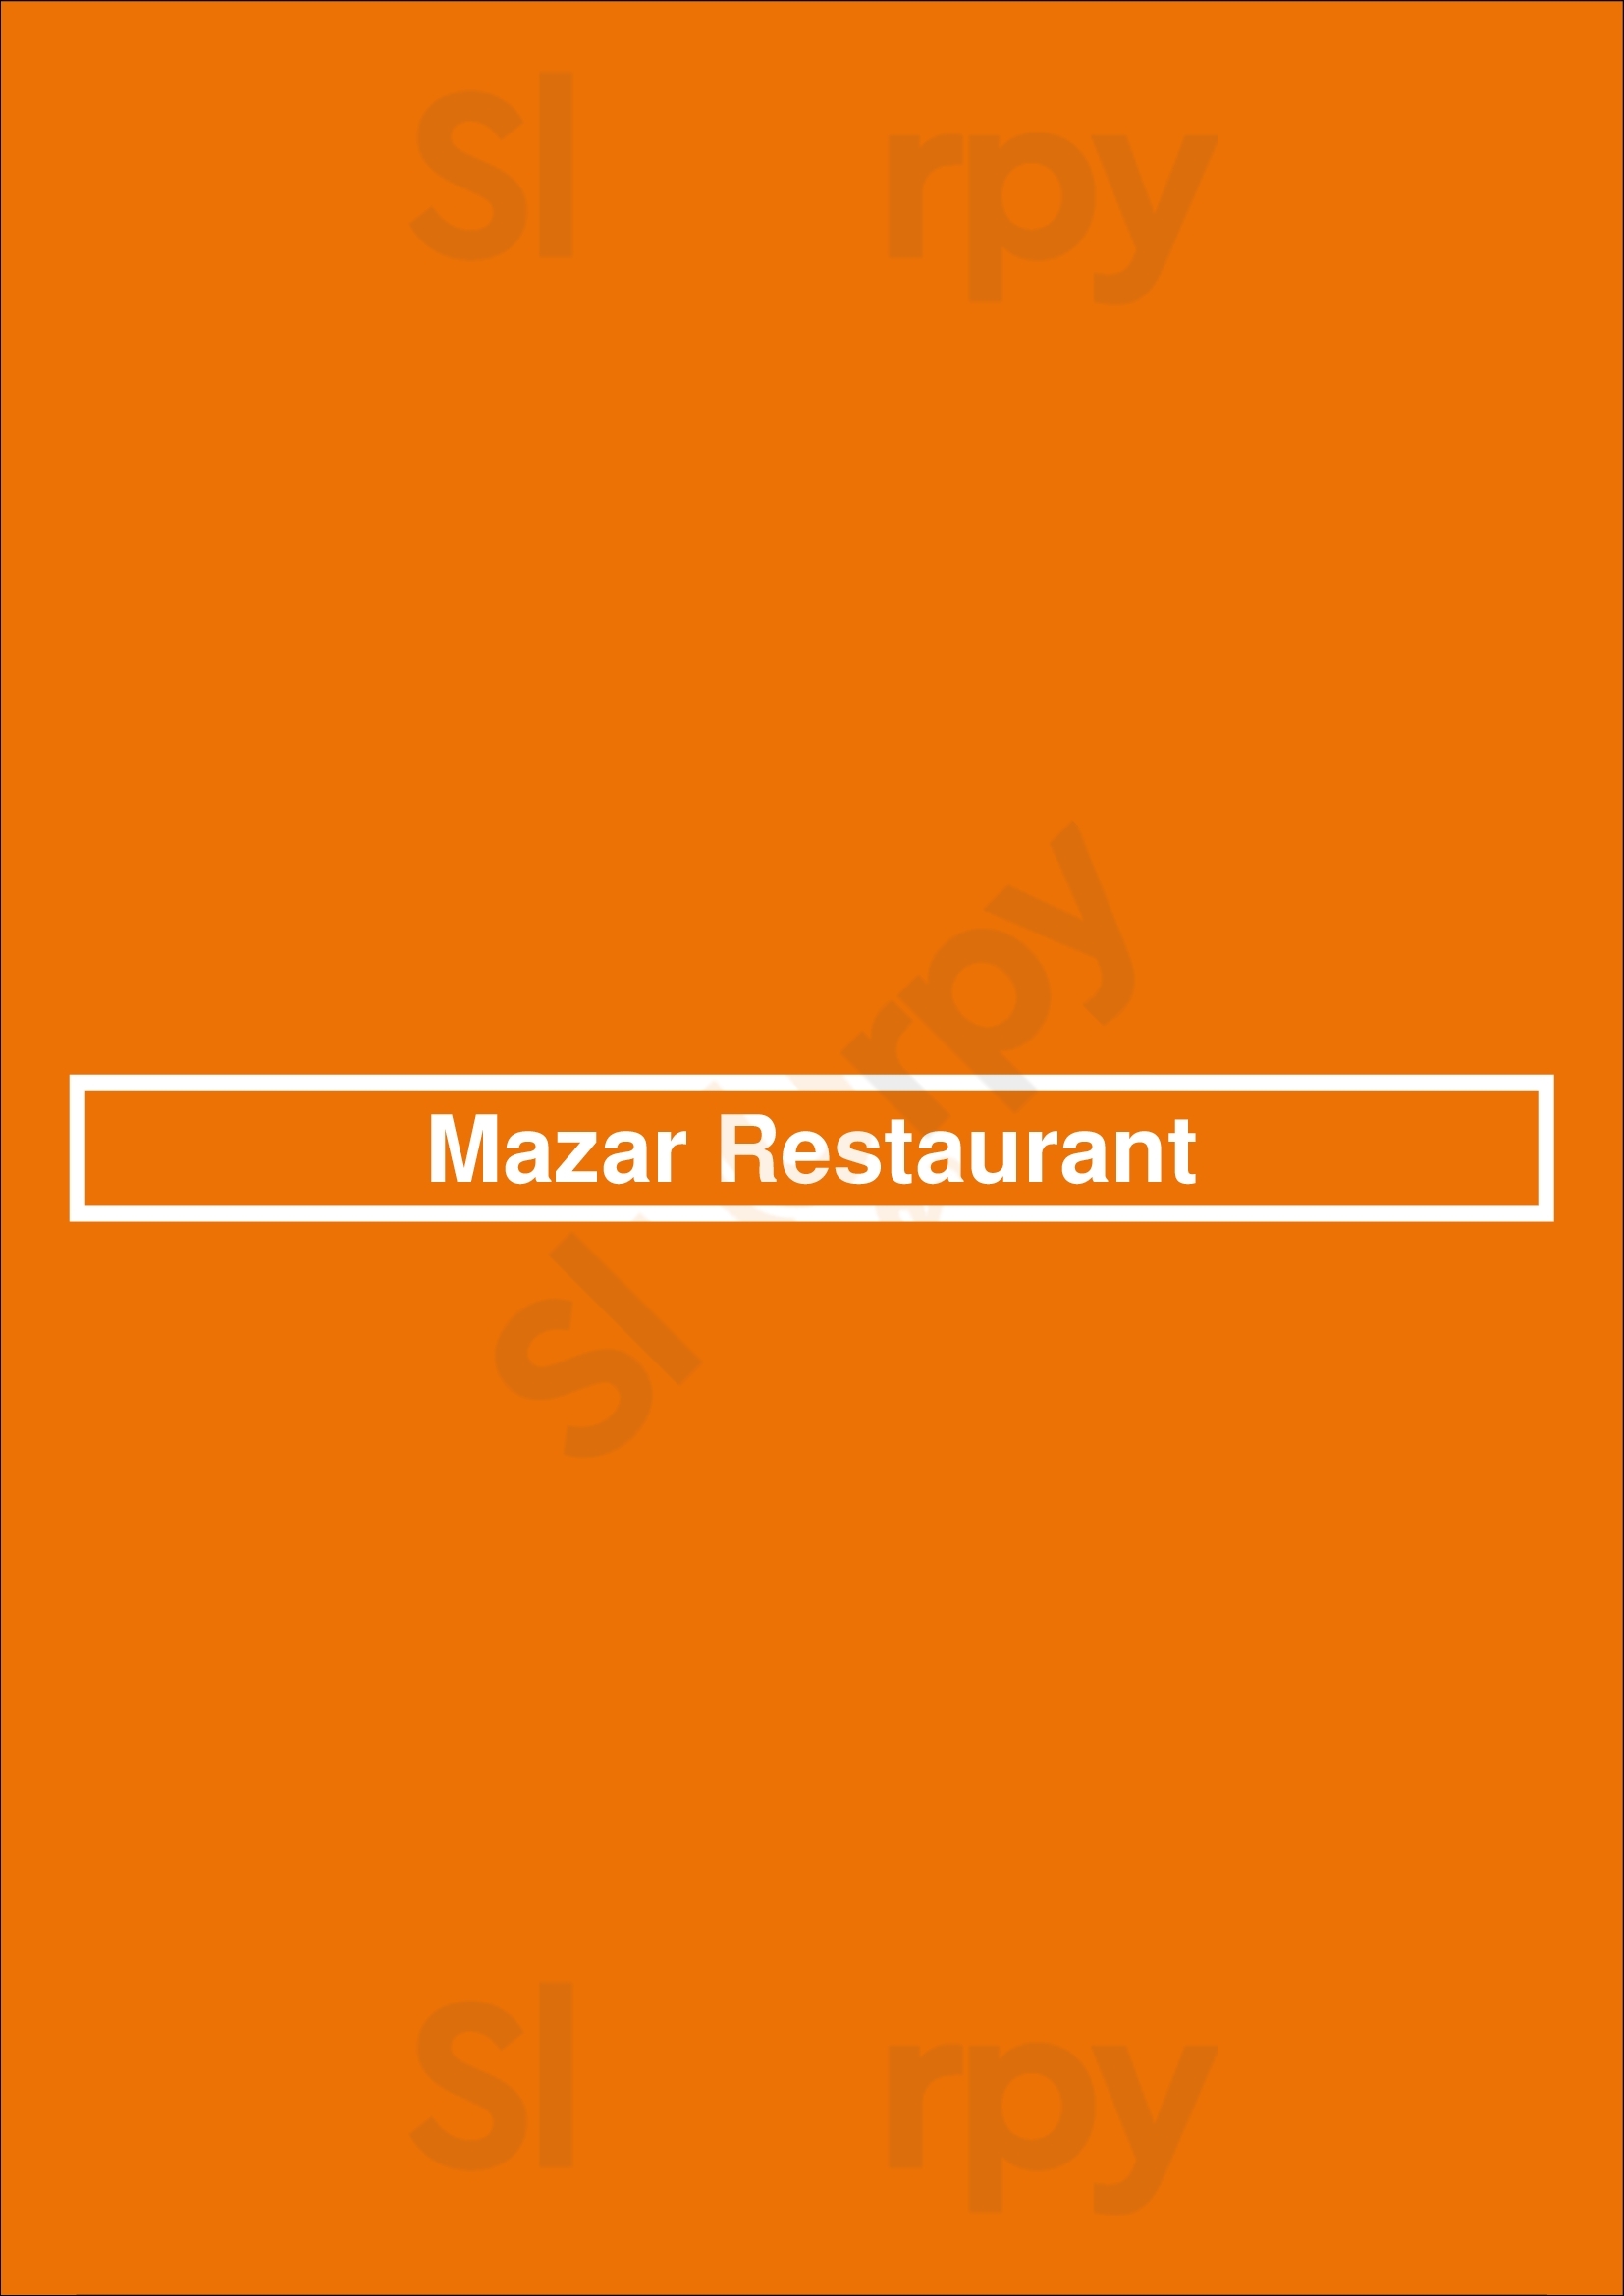 Mazar Restaurant Harrow Menu - 1